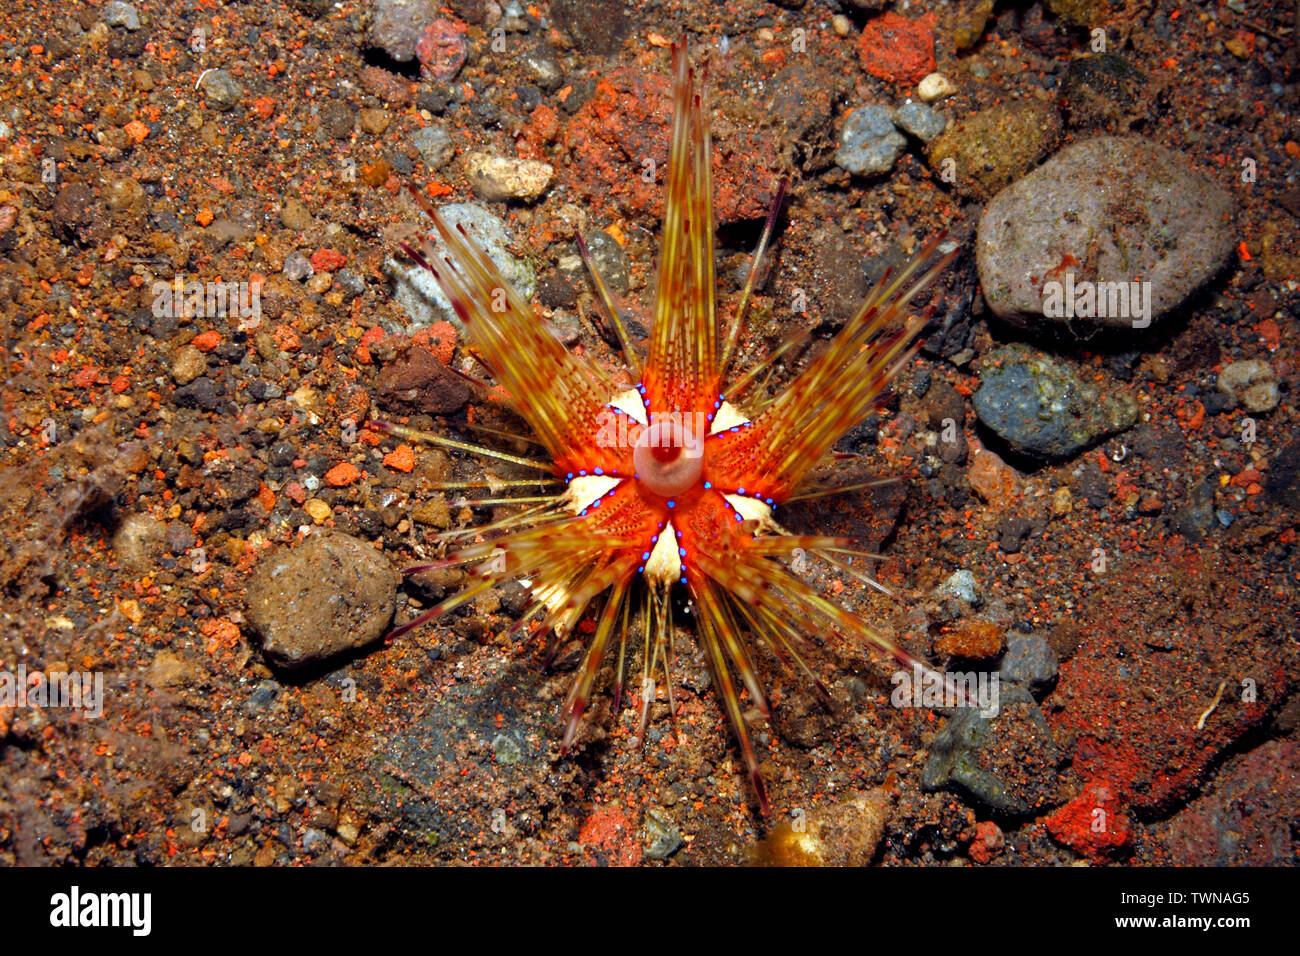 Magnificent Sea Urchin, Astropyga magnifica, appears to be a juvenile. Tulamben, Bali, Indonesia. Bali Sea, Indian Ocean Stock Photo